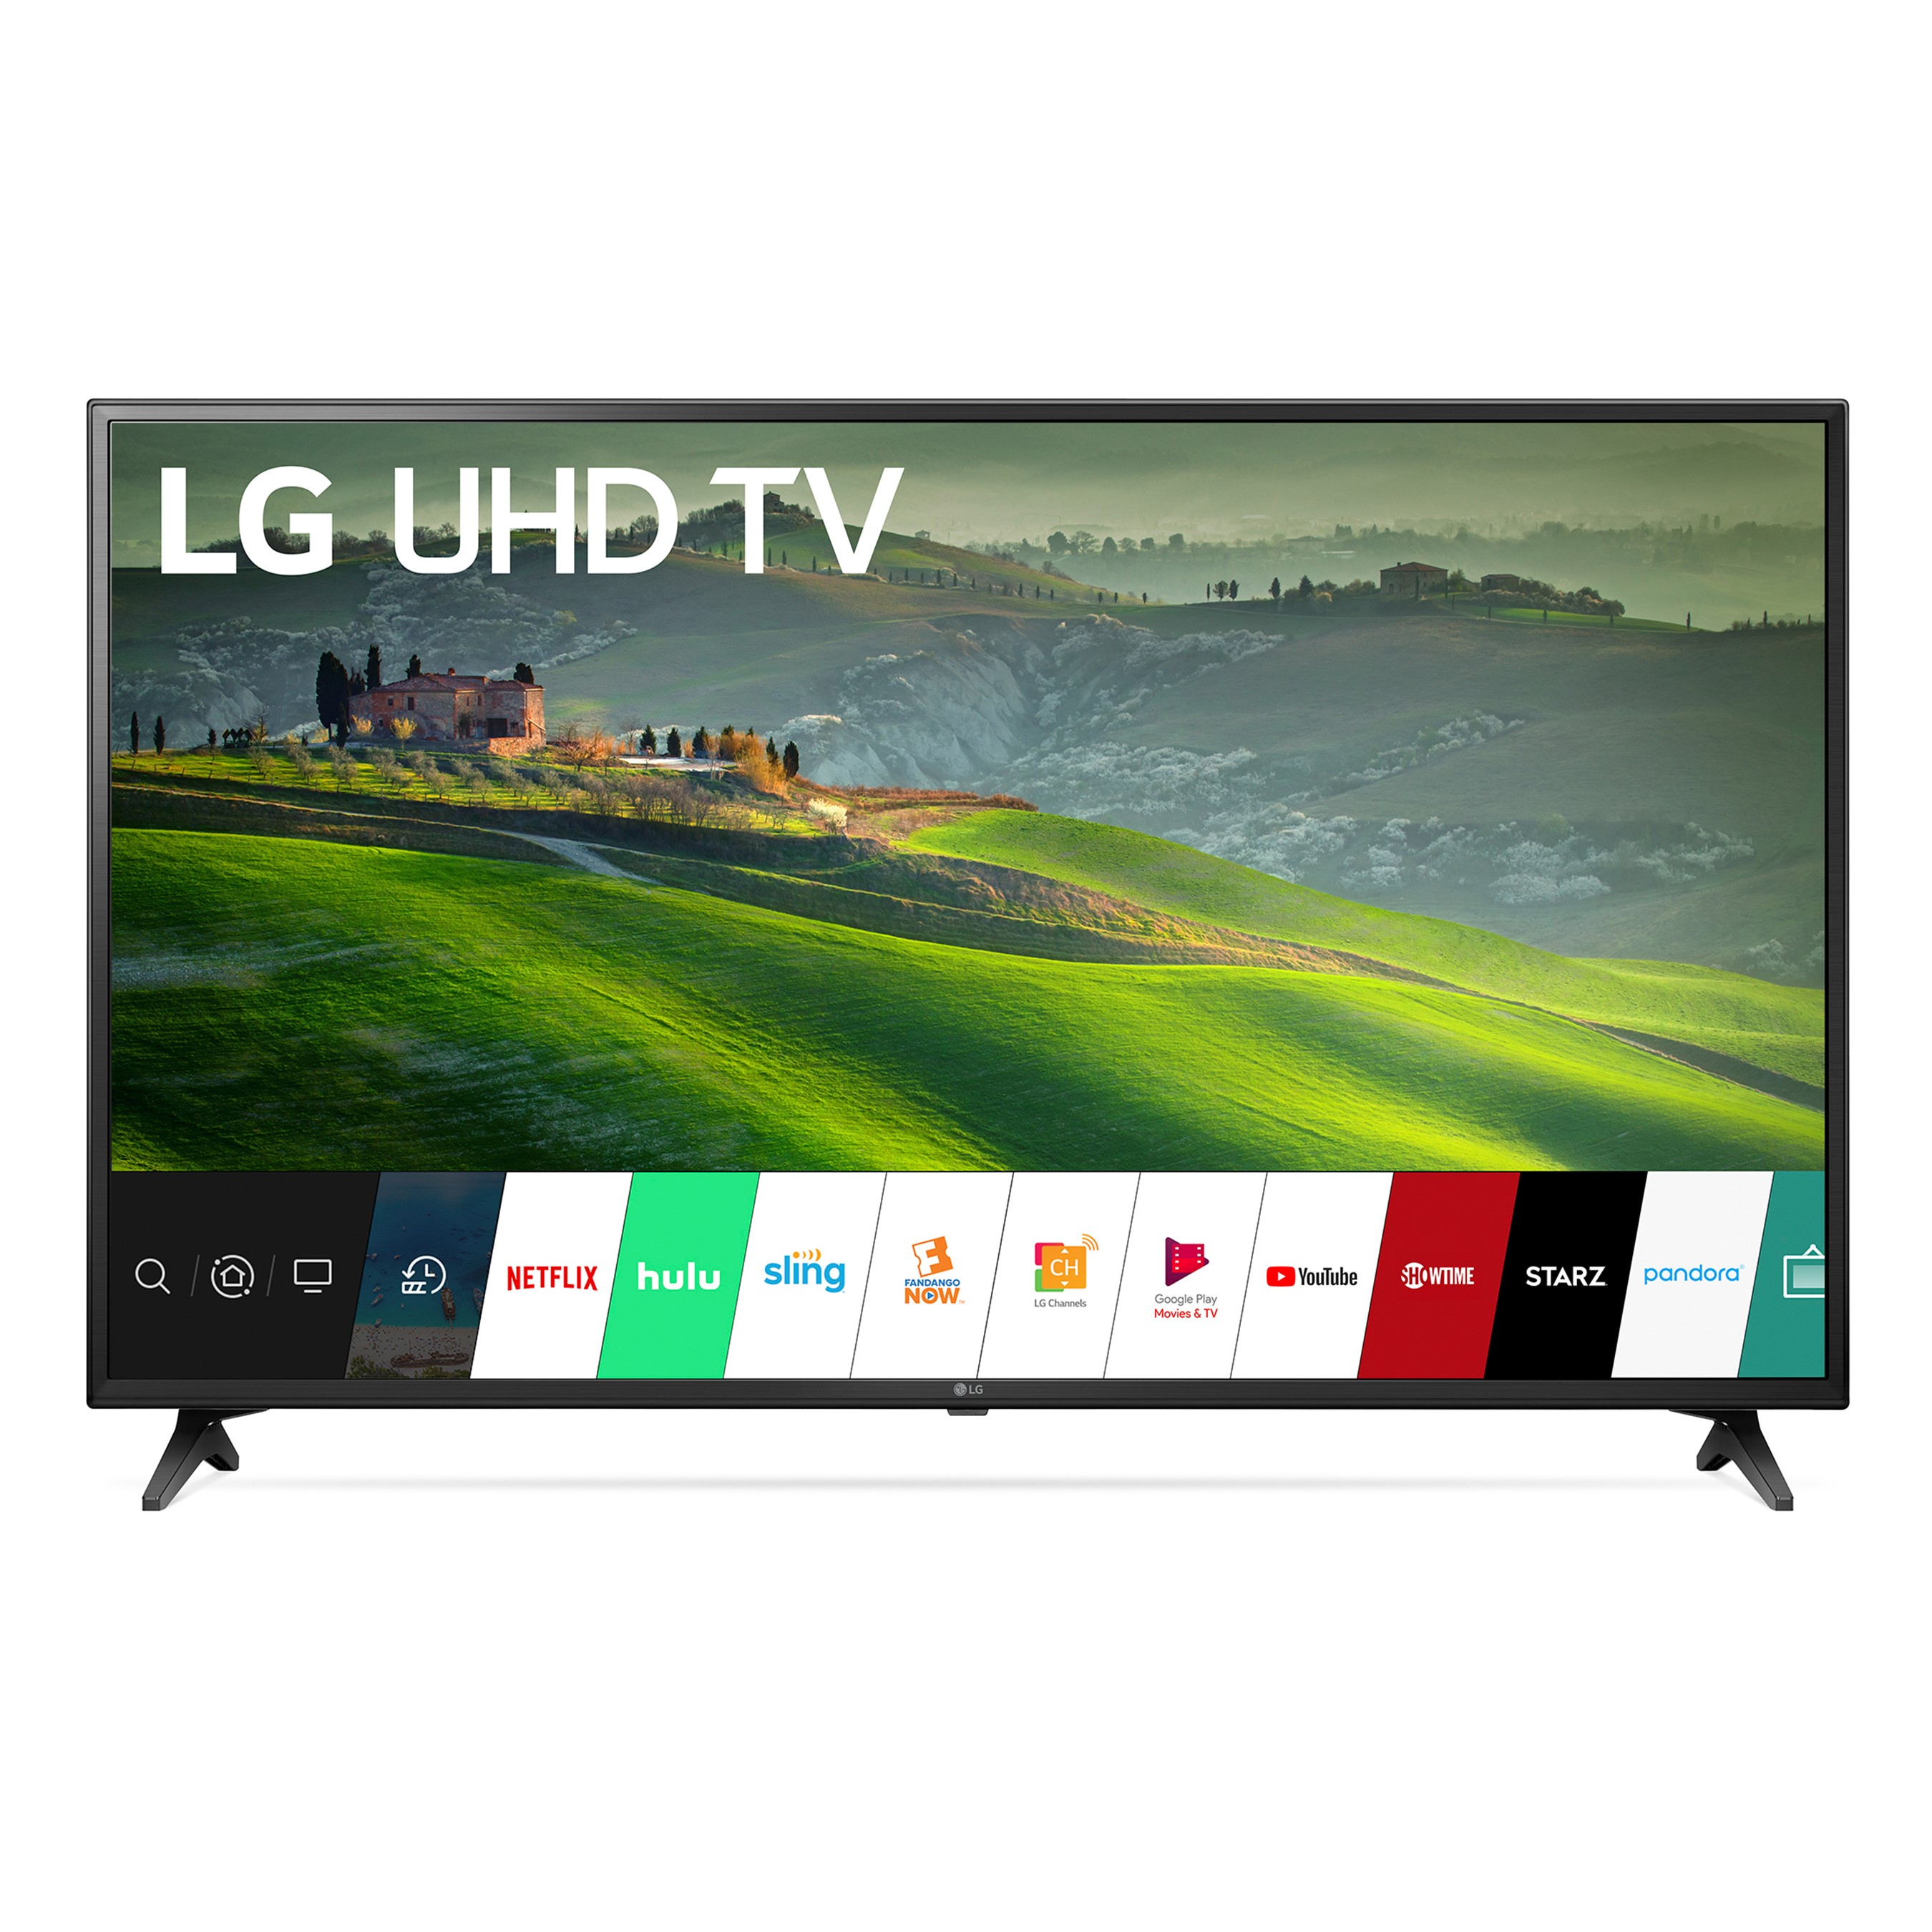 LG 65" Class 4K UHD 2160p LED Smart TV With HDR 65UM6900PUA - image 1 of 14